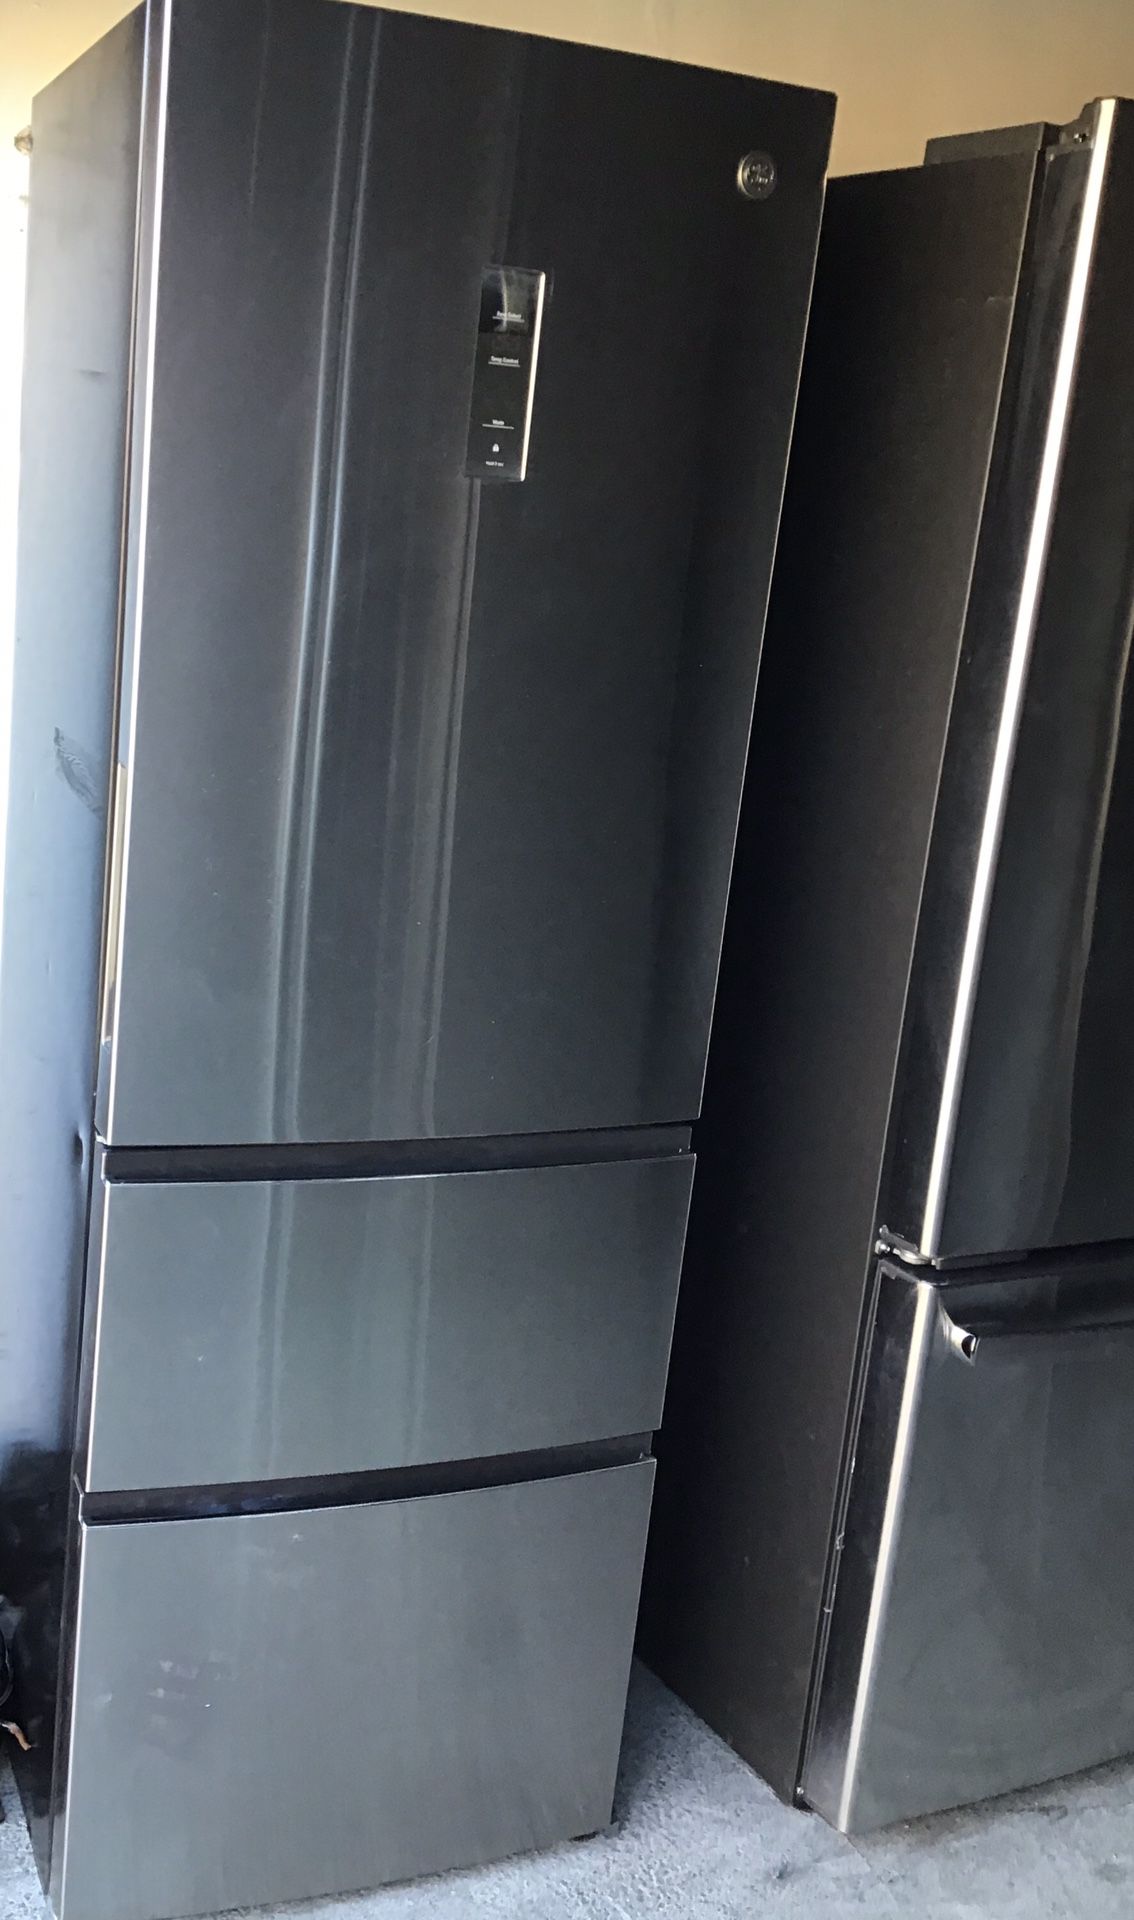 GE Bottom Freezer Refrigerator semi new